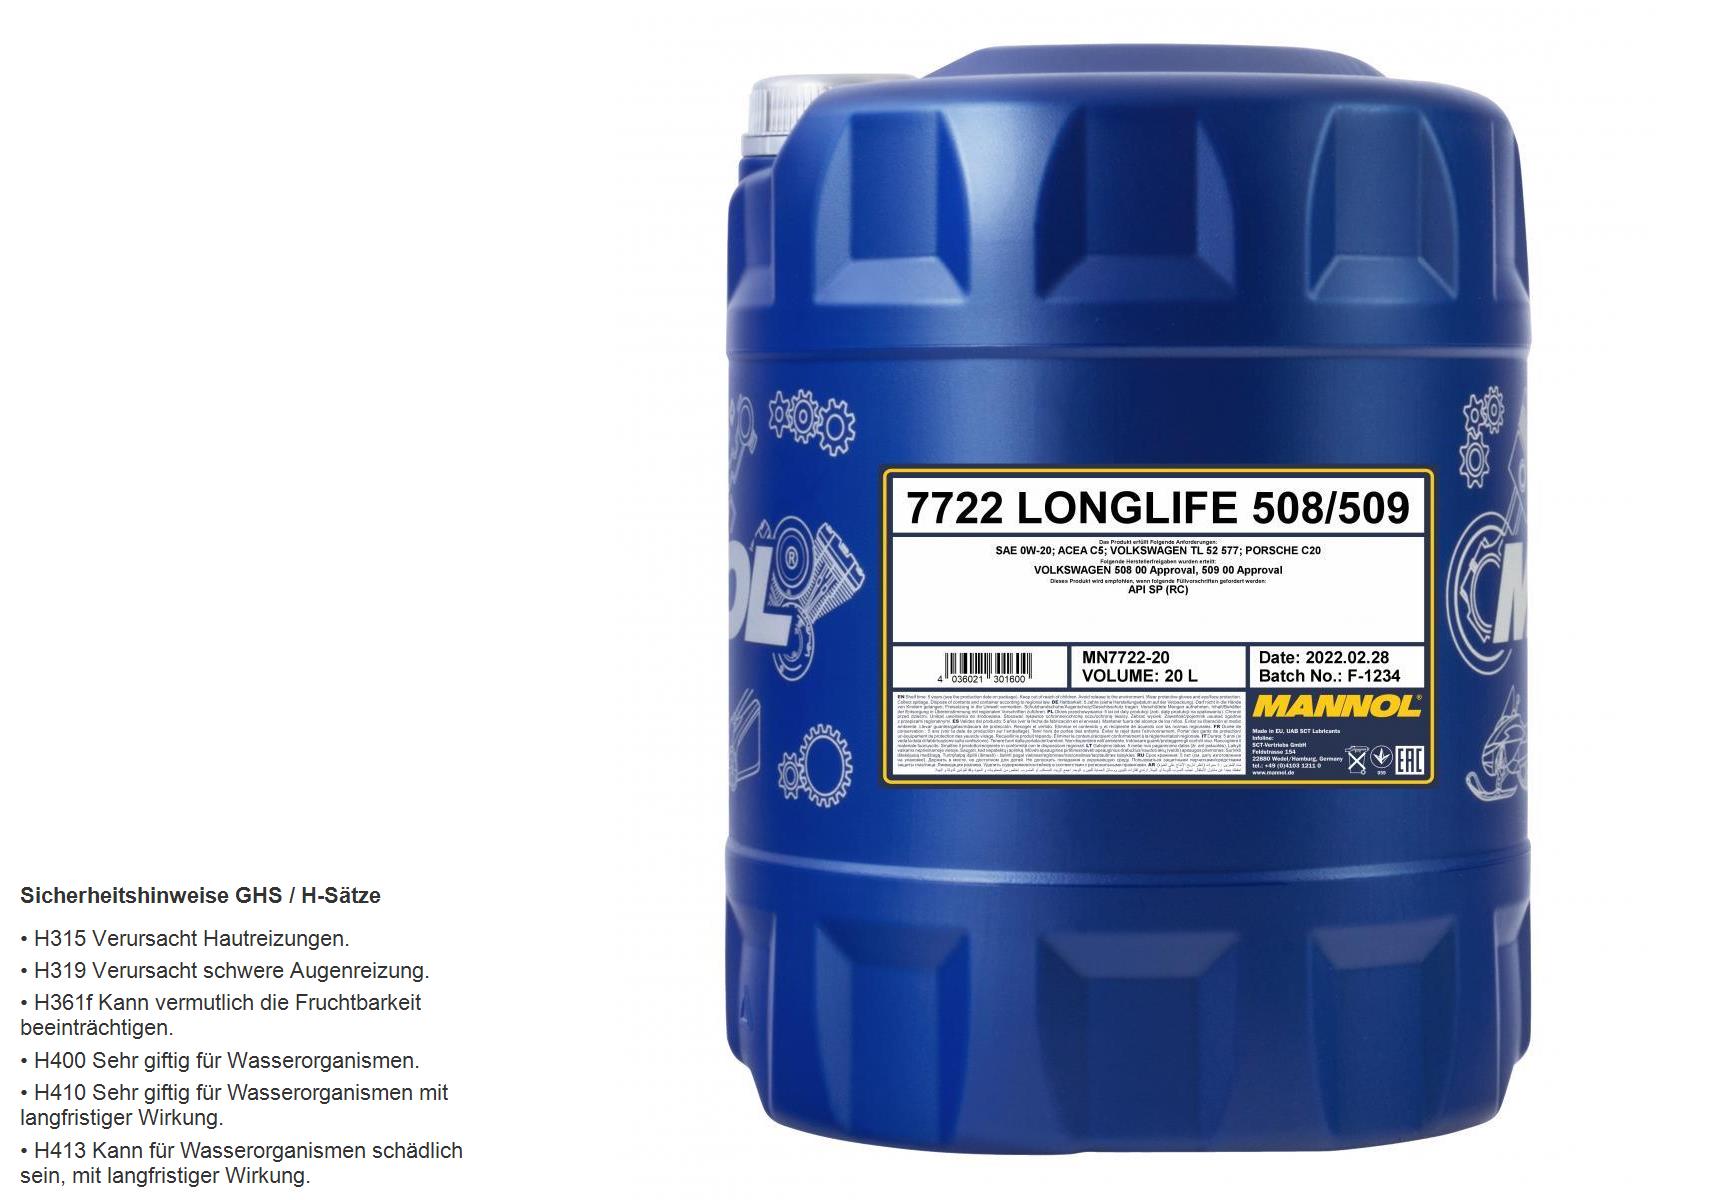 20 Liter MANNOL 7722 Longlife 508/509 0W-20 Motoröl Engine Oil